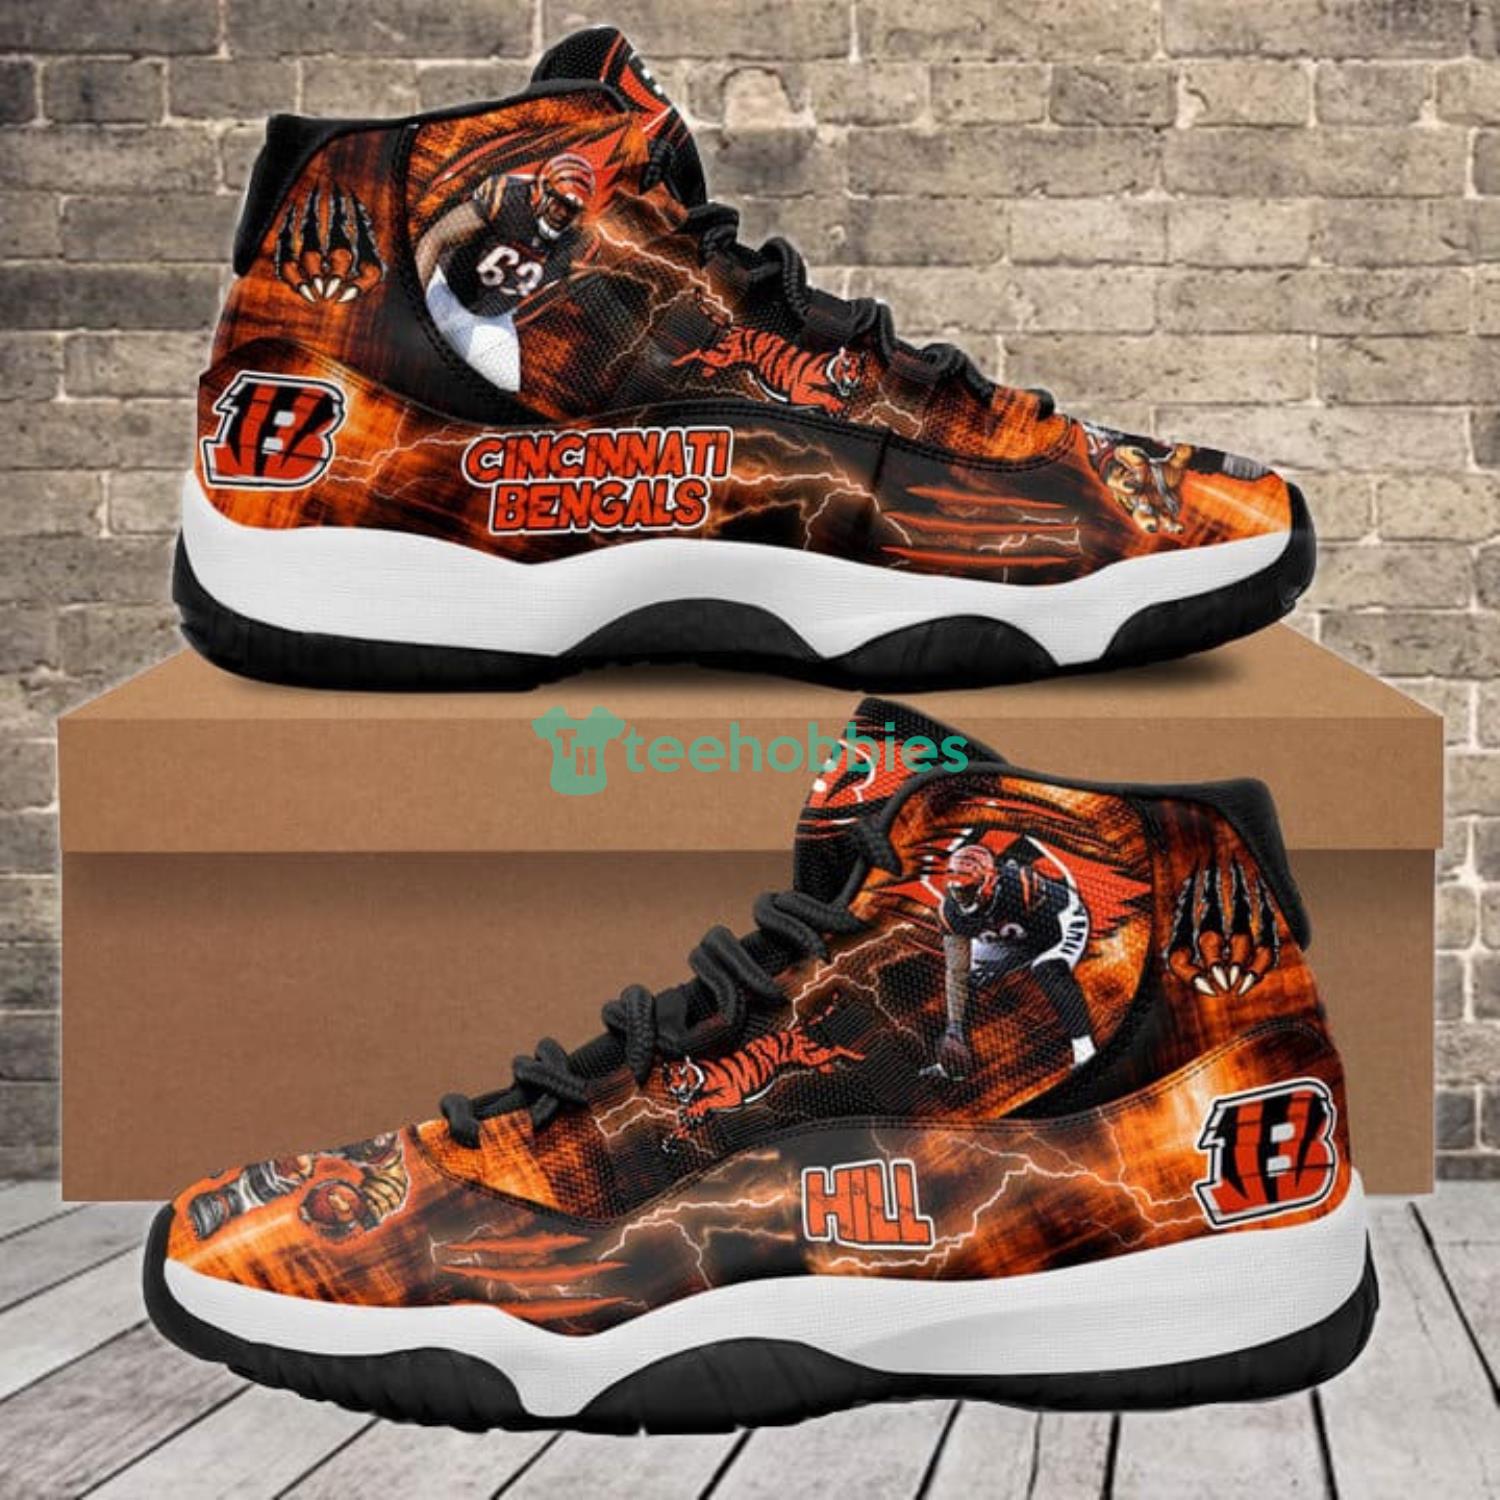 Cincinnati Bengals Trey Hill Air Jordan 11 Shoes Sneaker For Fans Product Photo 1